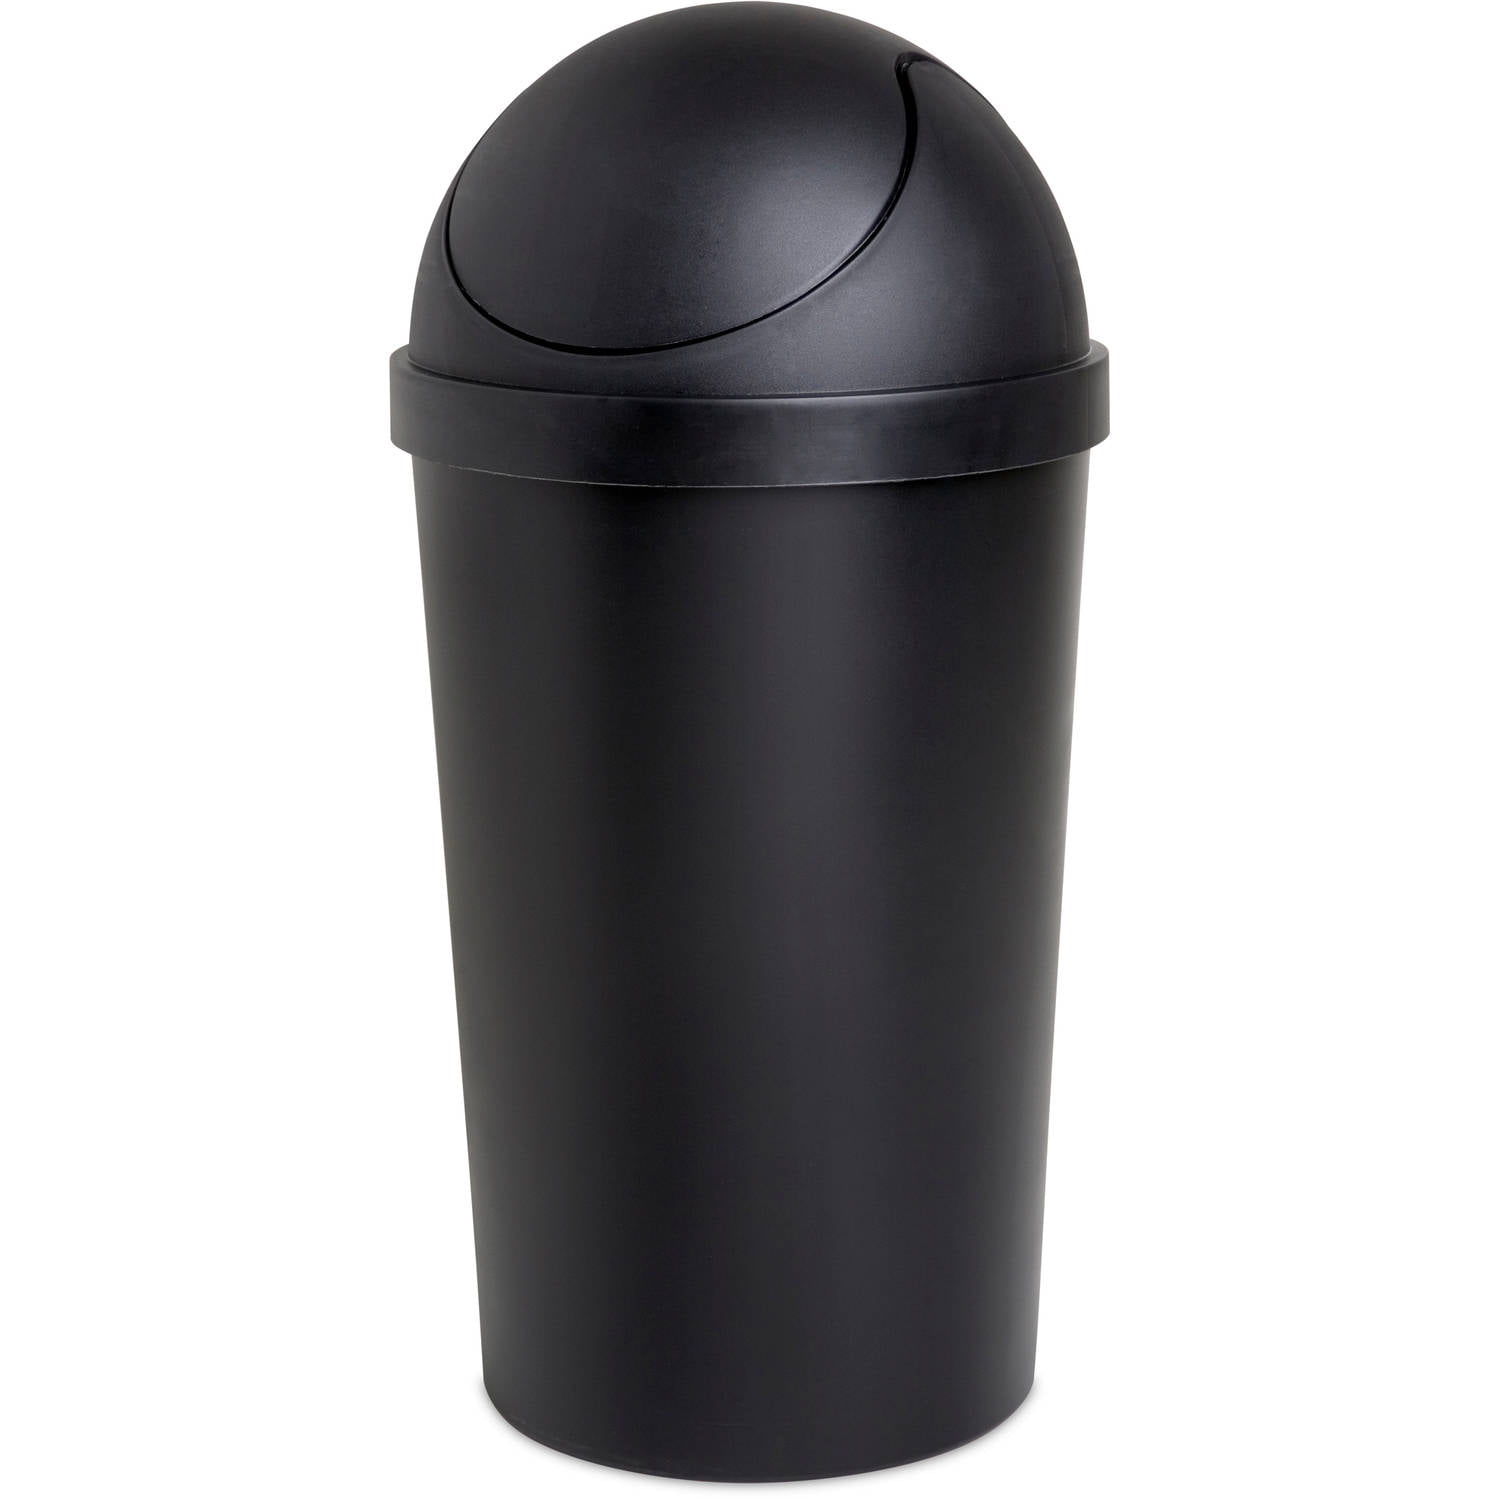 Sterilite 10839006 3 Gallon Round Swing Top Plastic Wastebasket 12 Pack Black 